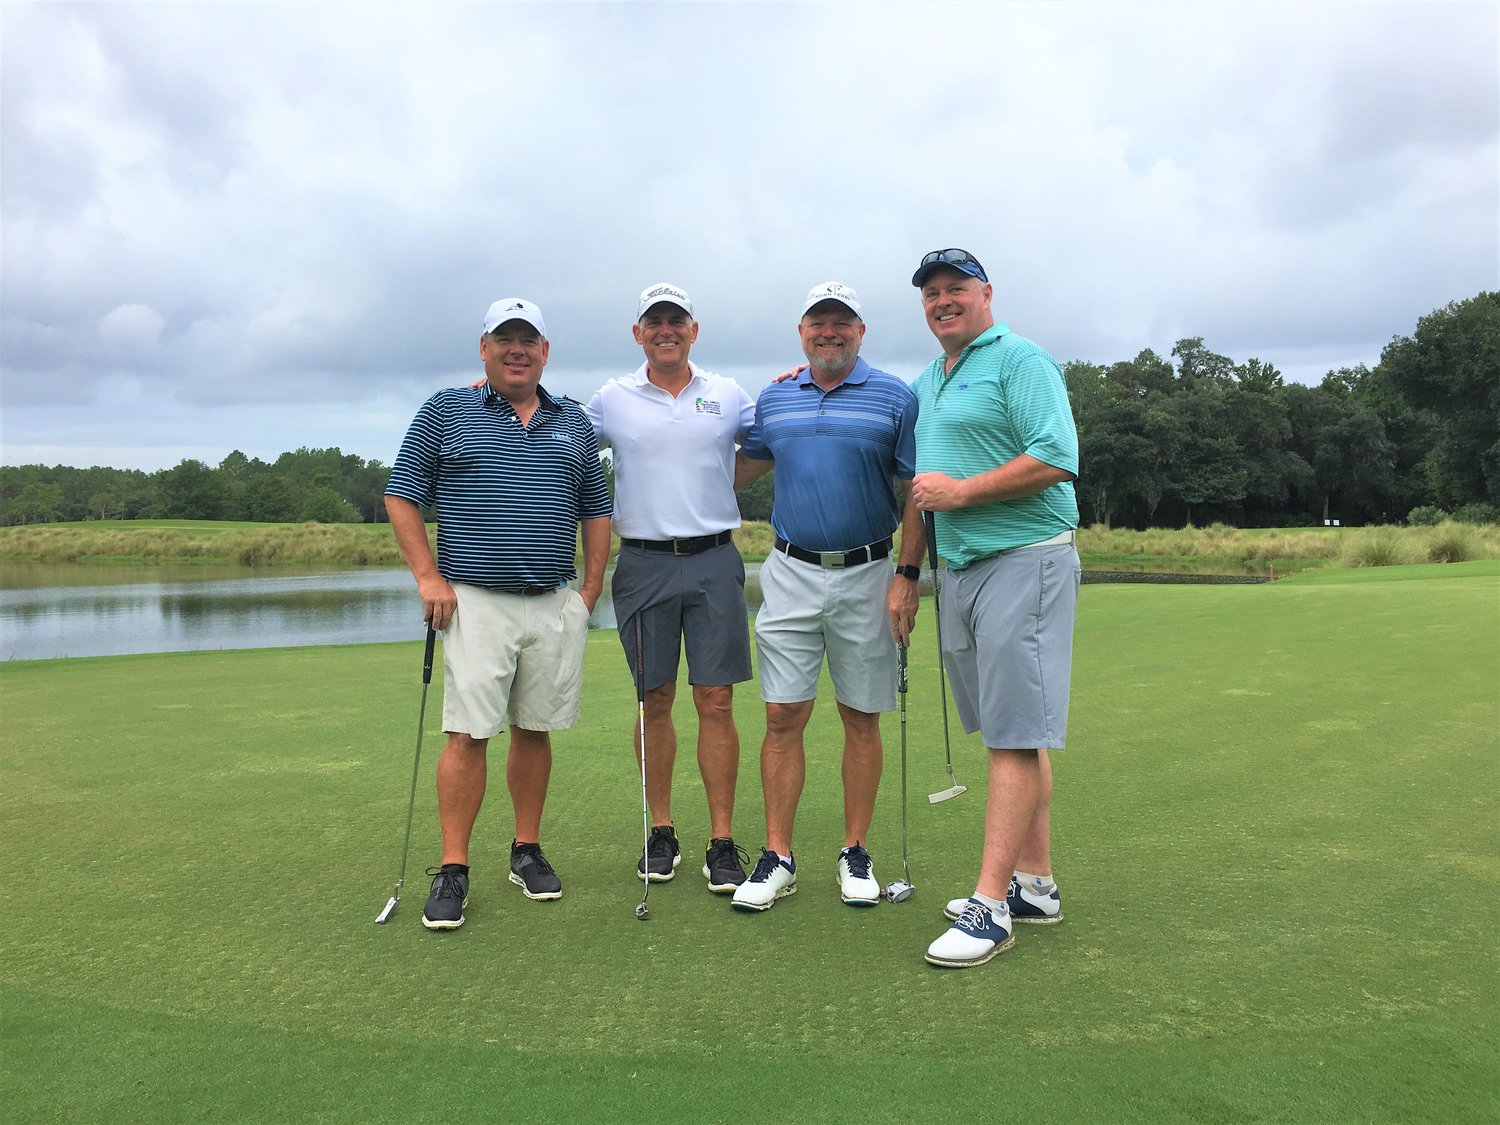 Elders Golf Tournament 2021 low gross winners were Orthopaedic Associates of St. Augustine.